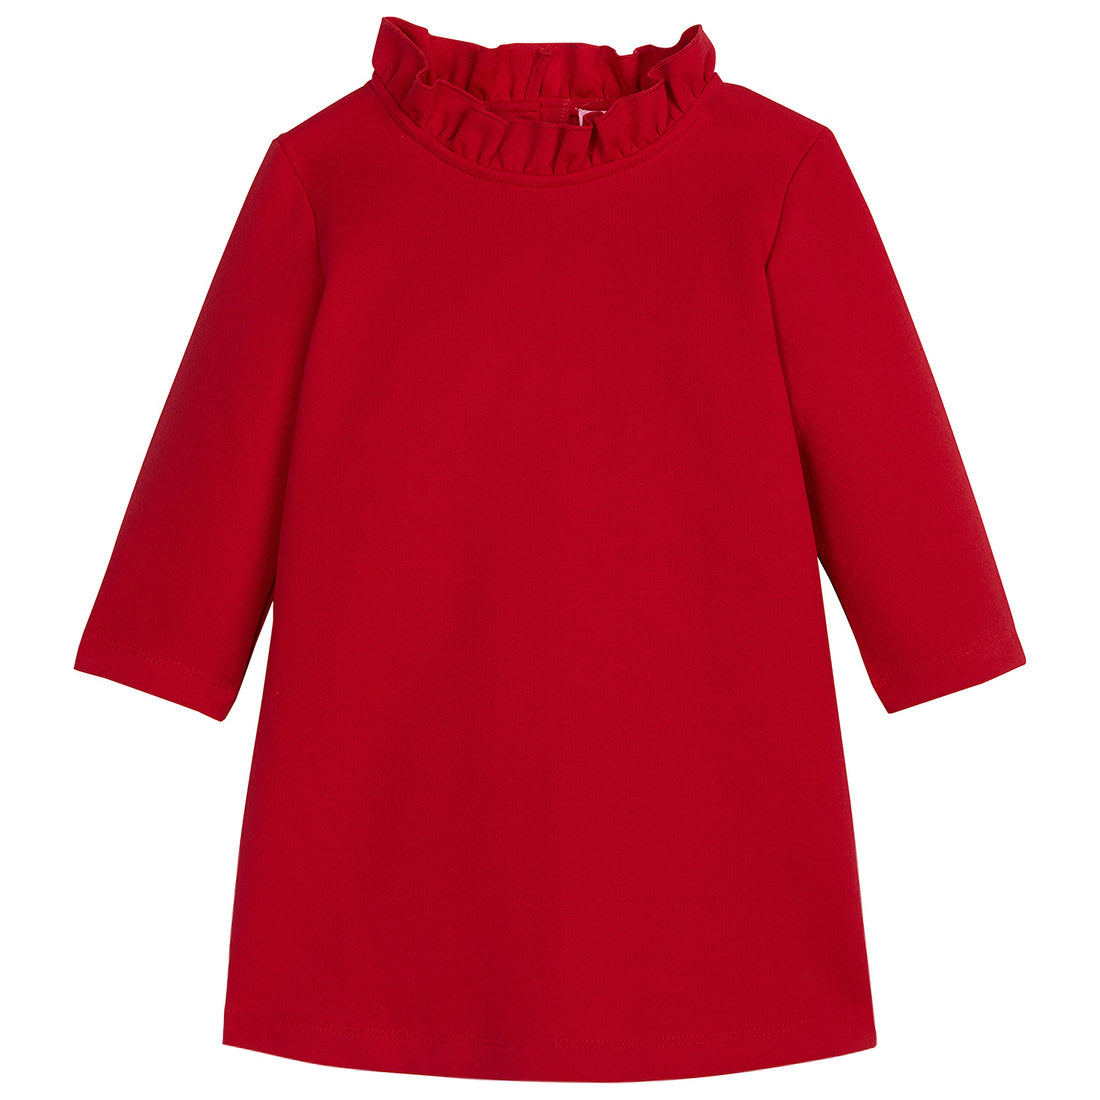 Red Long Sleeve dress with ruffles around the neckline--ToryDress BISBY girls/teens